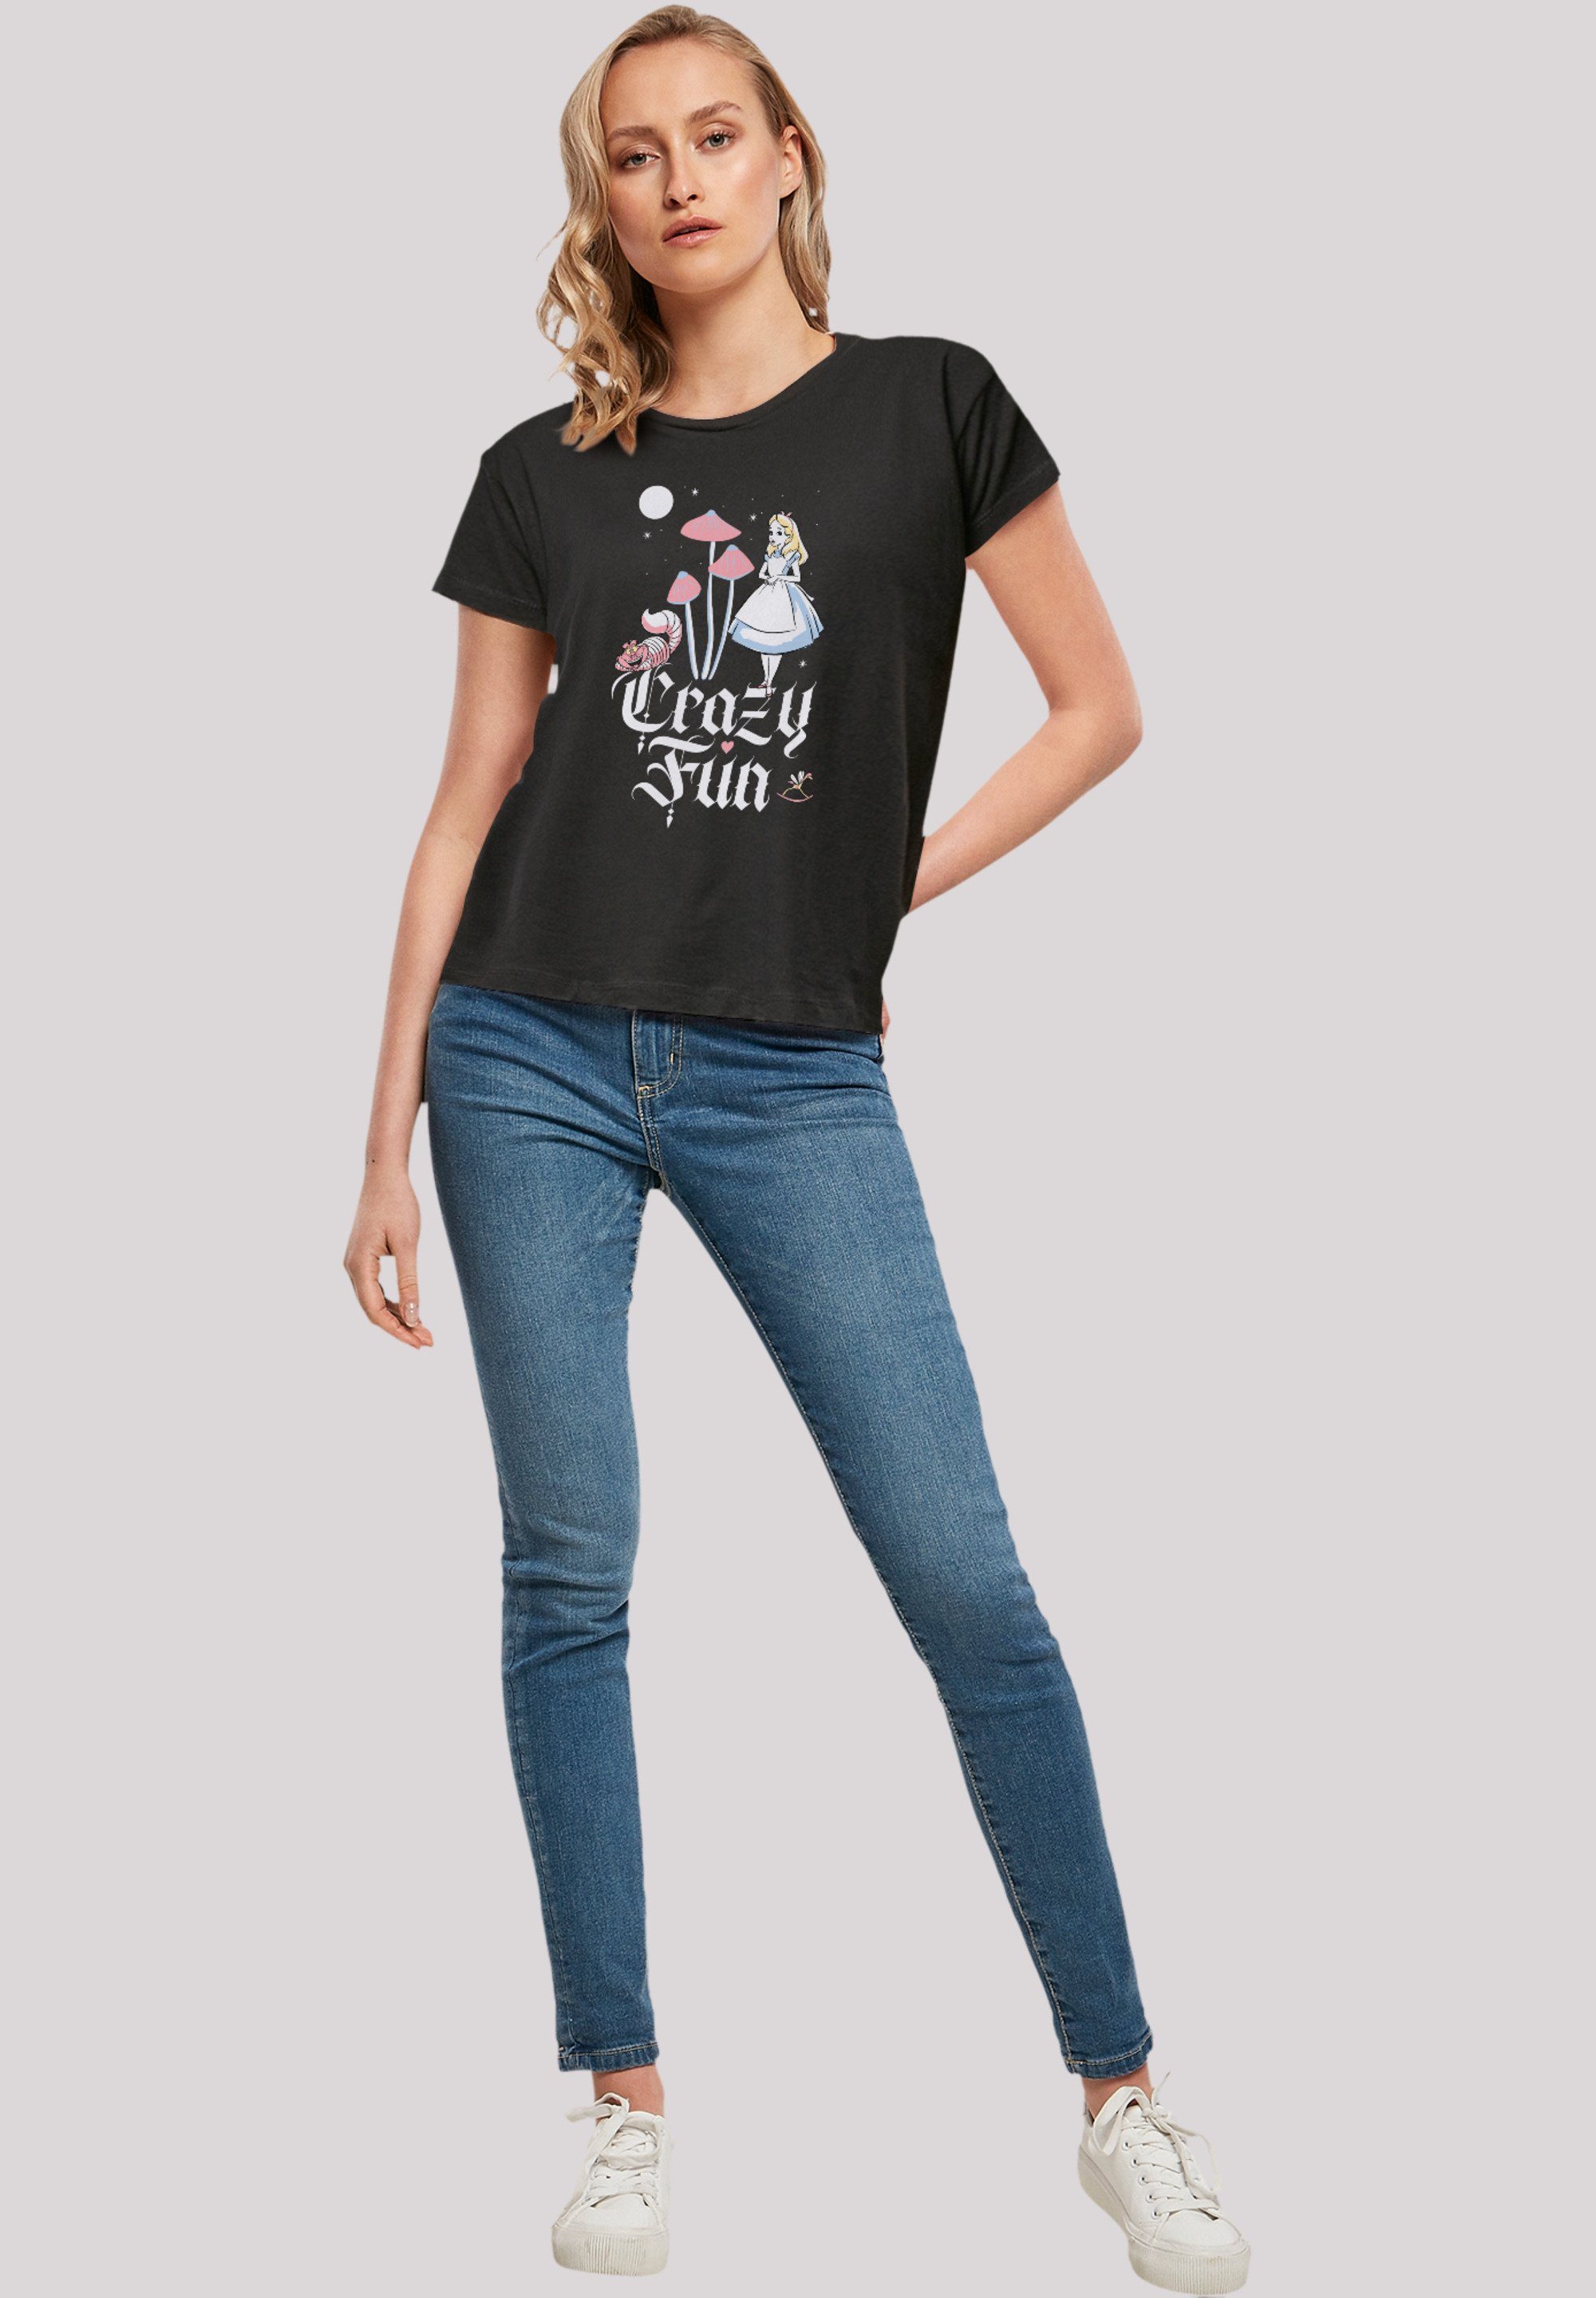 F4NT4STIC T-Shirt Disney Alice im Premium Qualität Wunderland Crazy Fun